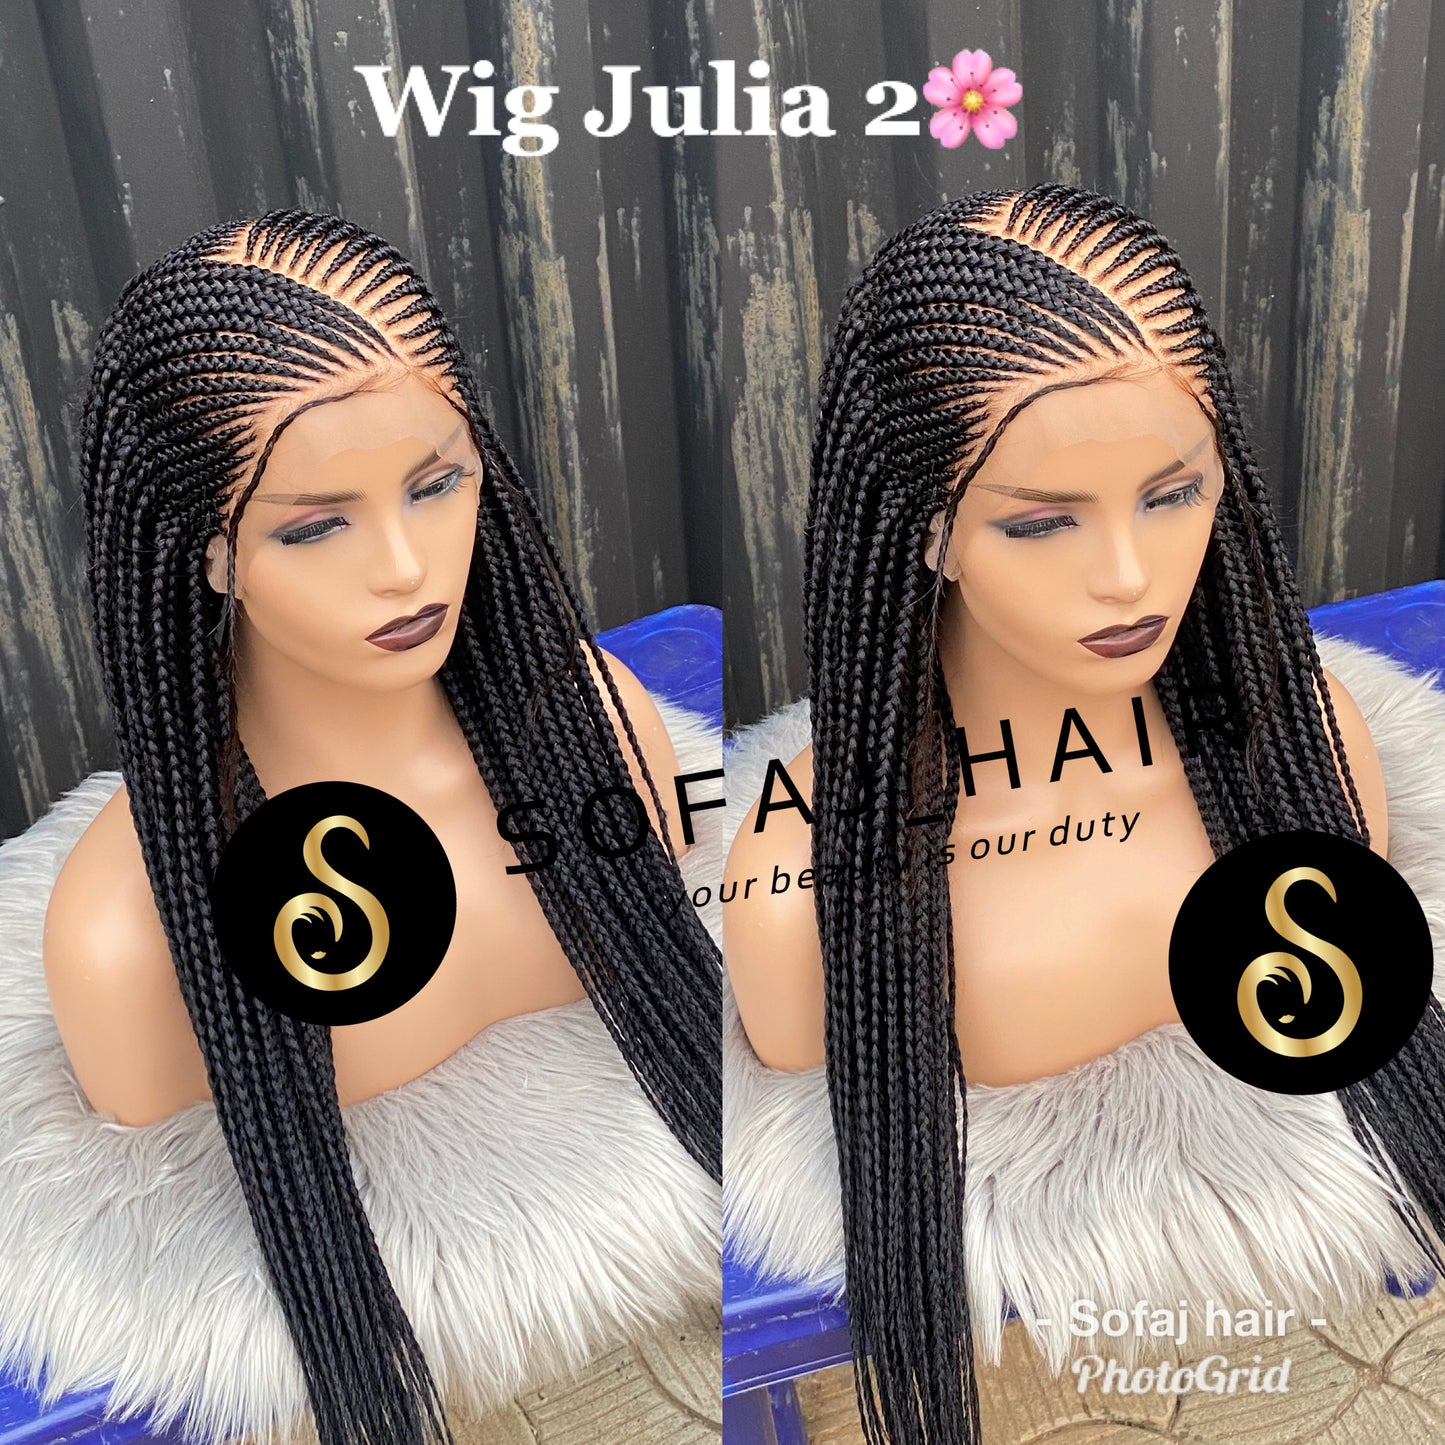 Wig Julia 2